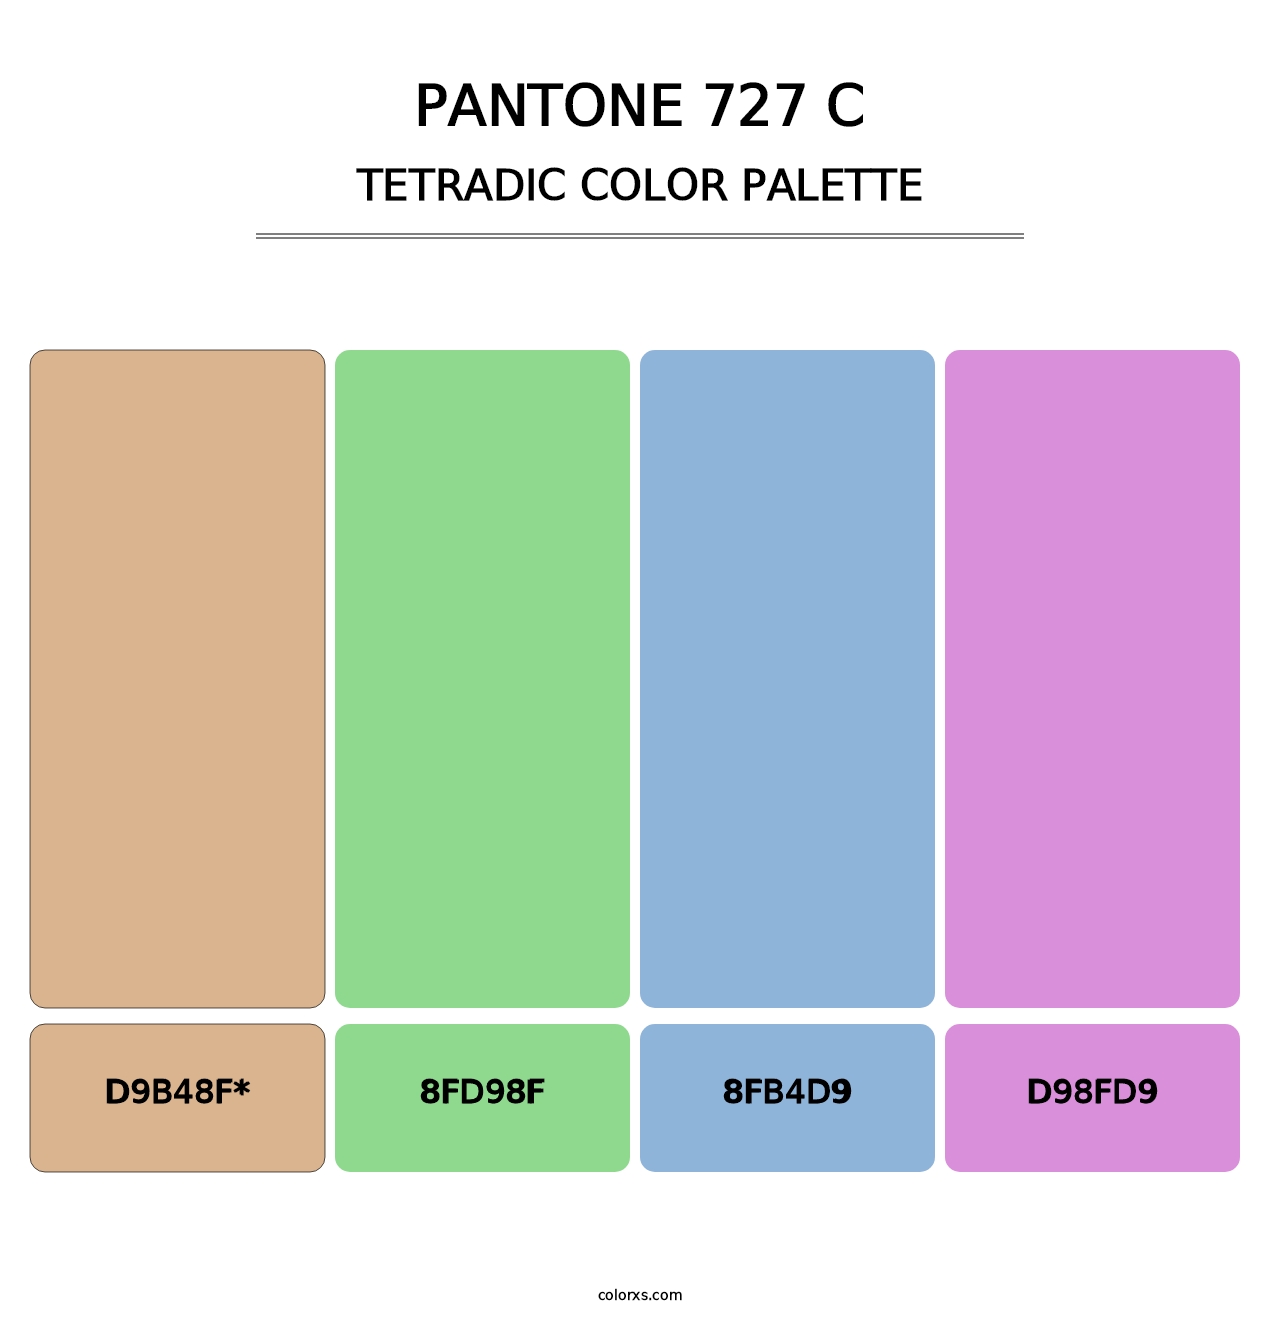 PANTONE 727 C - Tetradic Color Palette